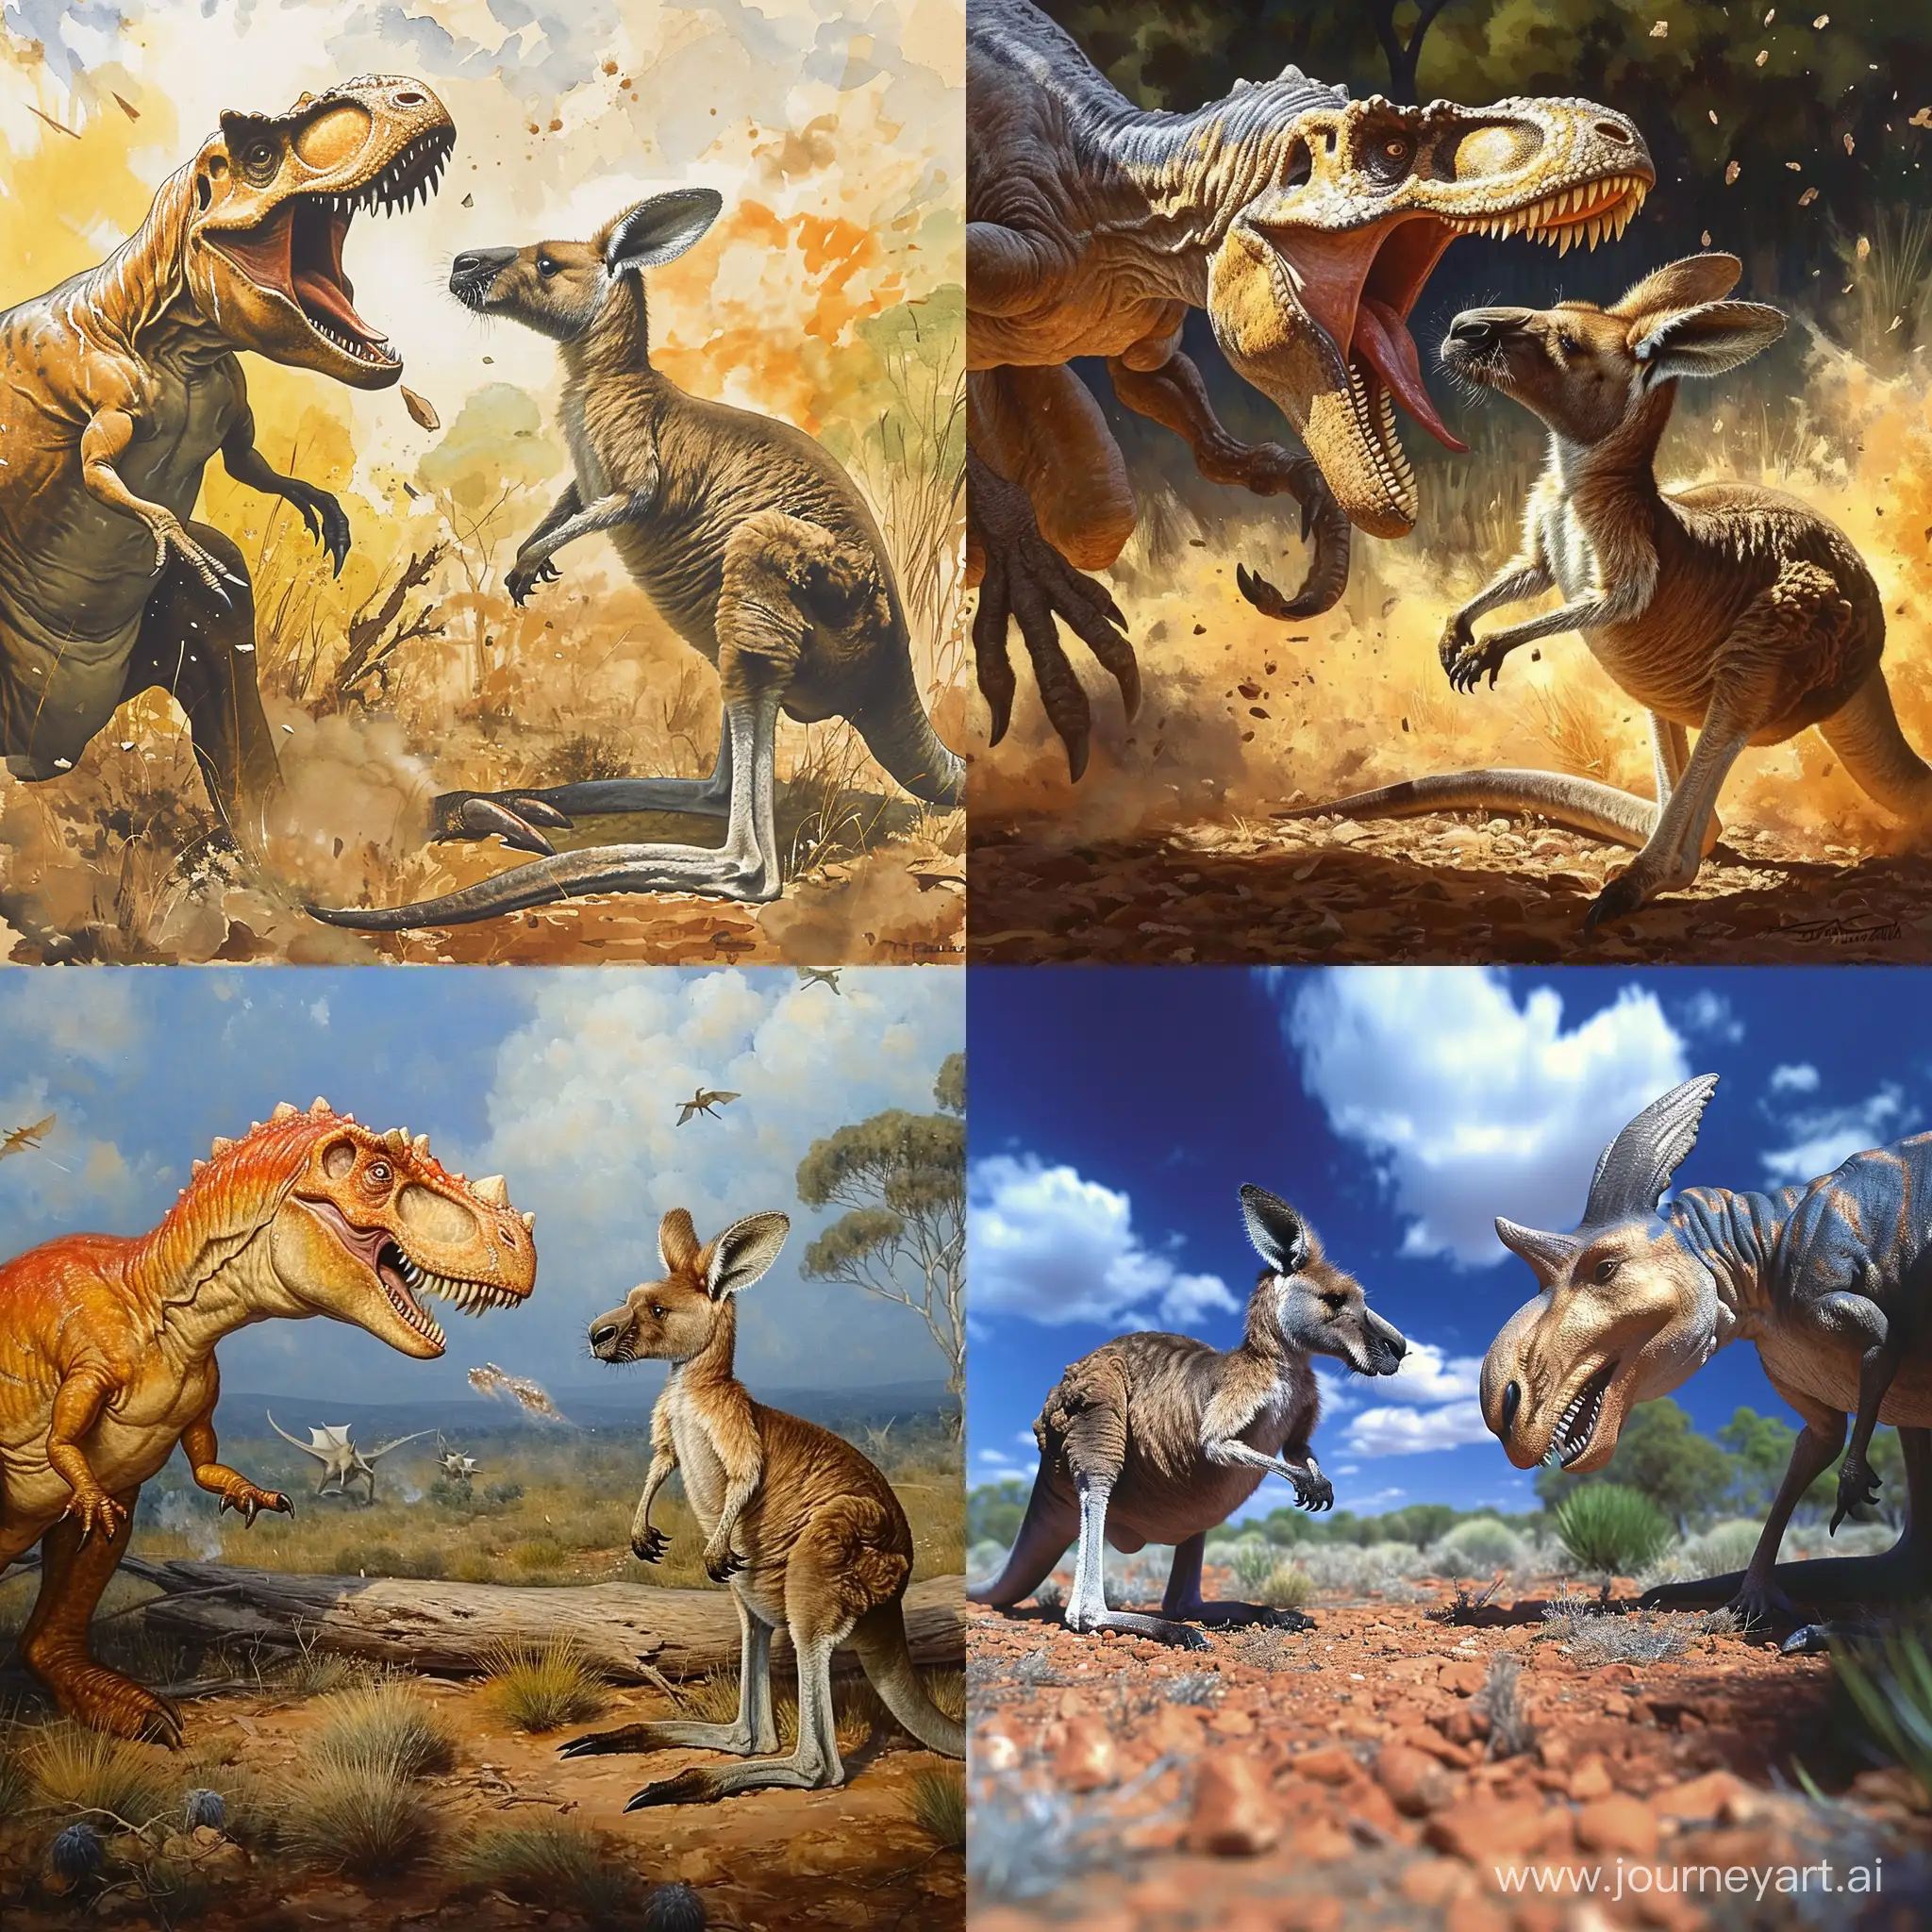 Epic-Dinosaur-vs-Kangaroo-Battle-in-Panoramic-Scene